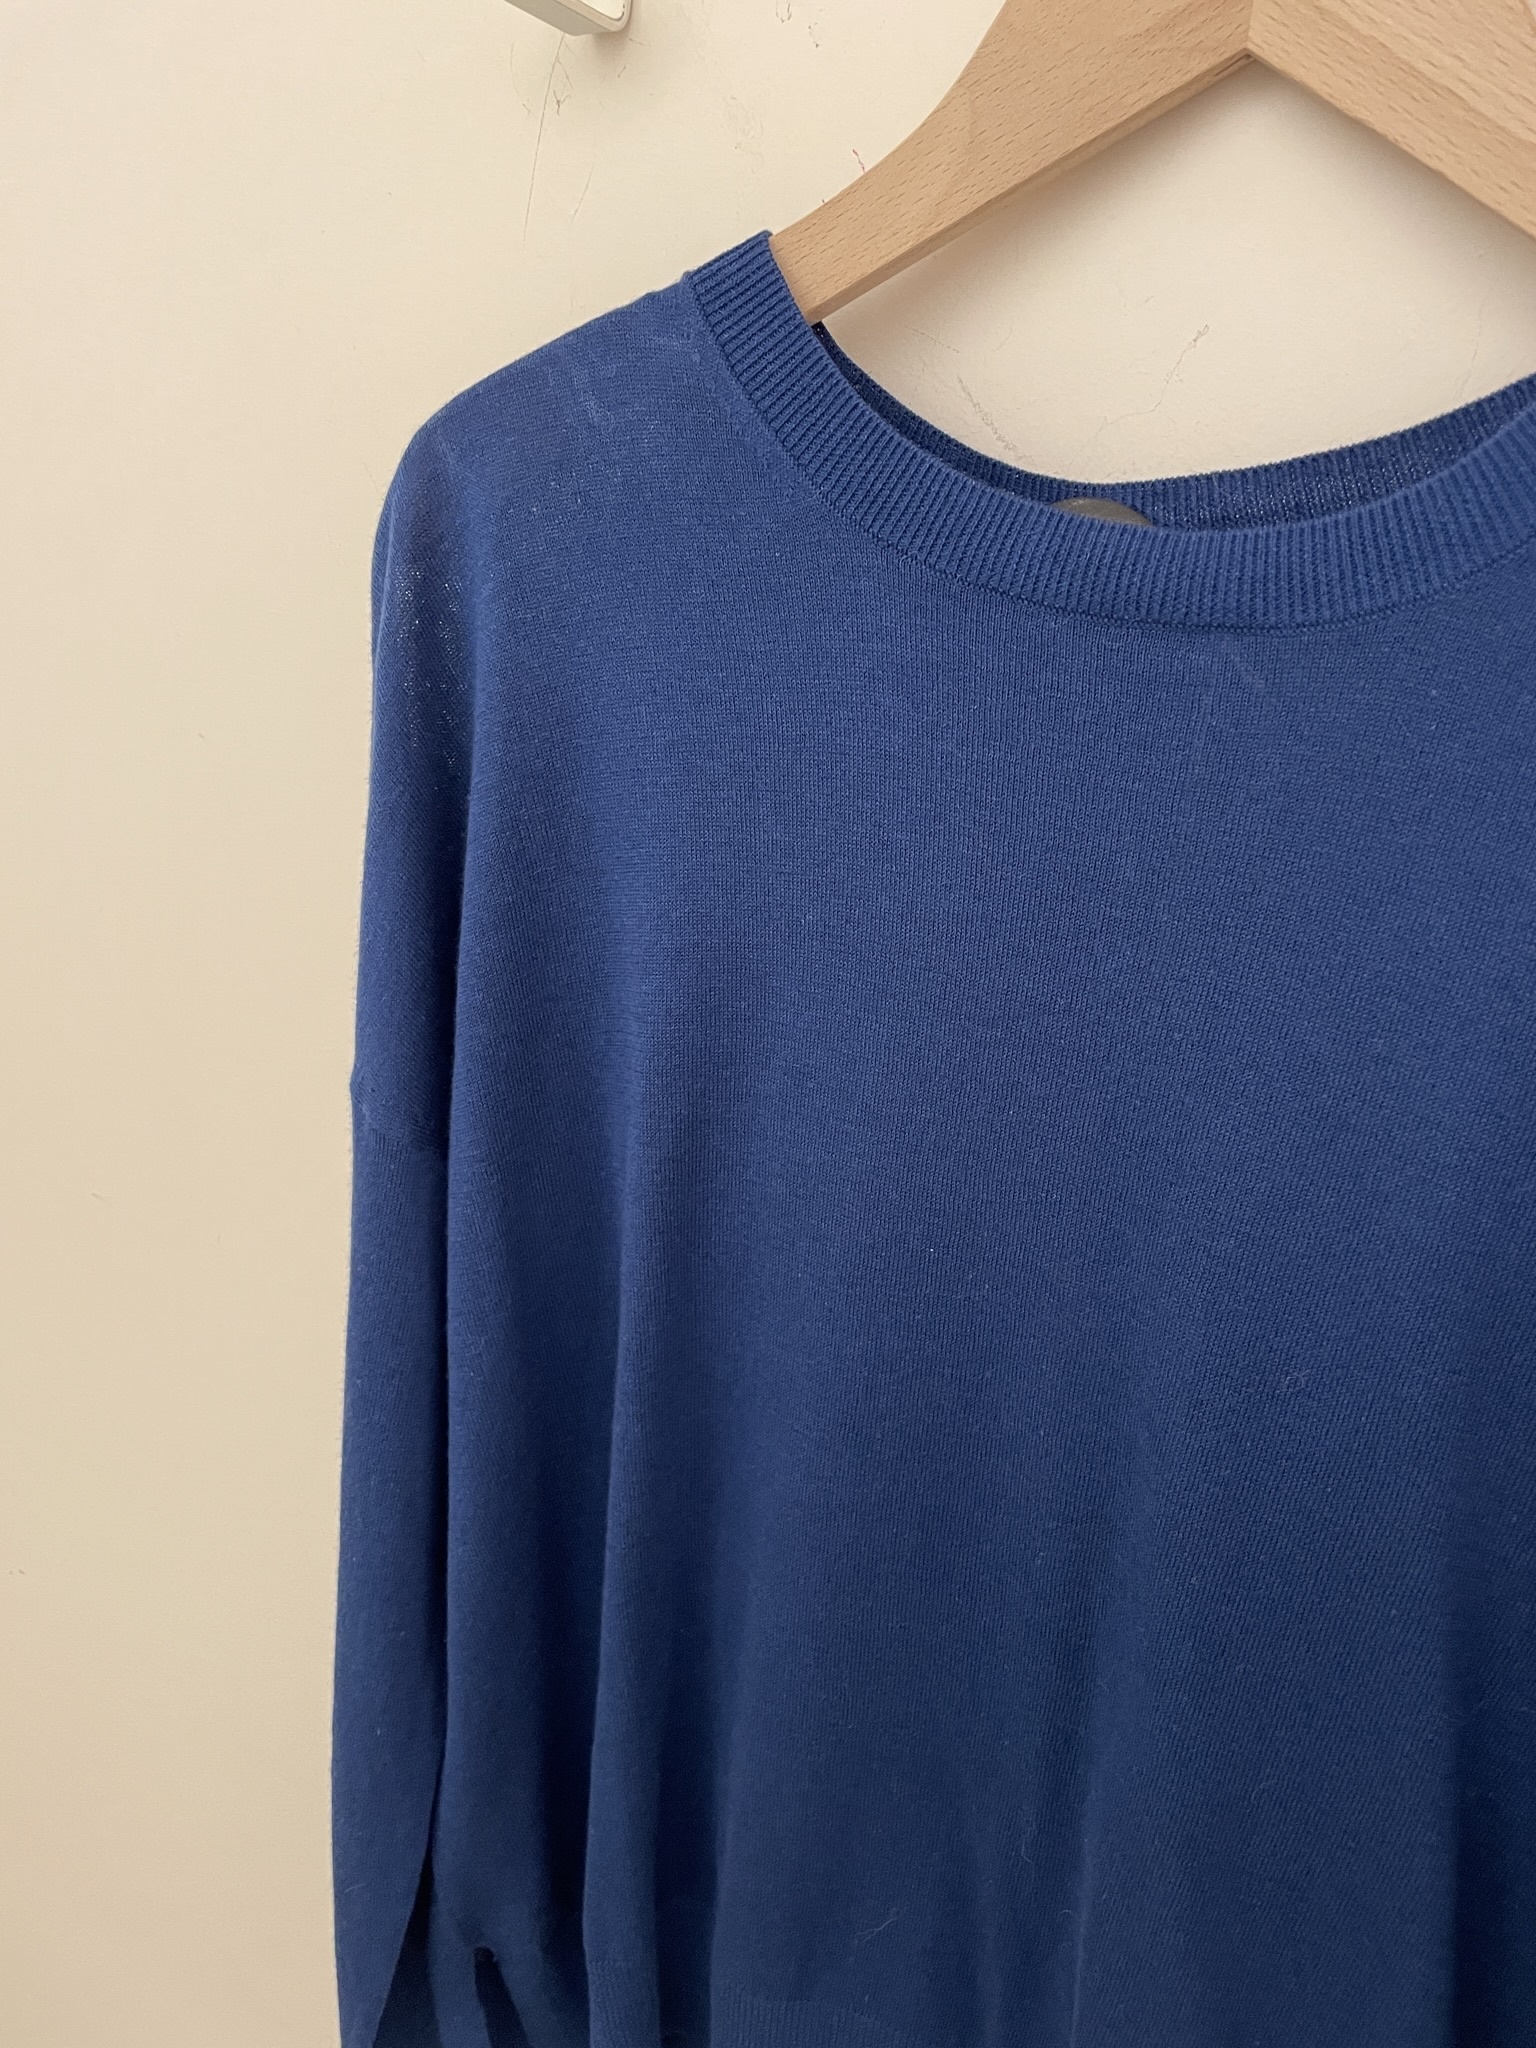 knit 96785 indigo blue-2